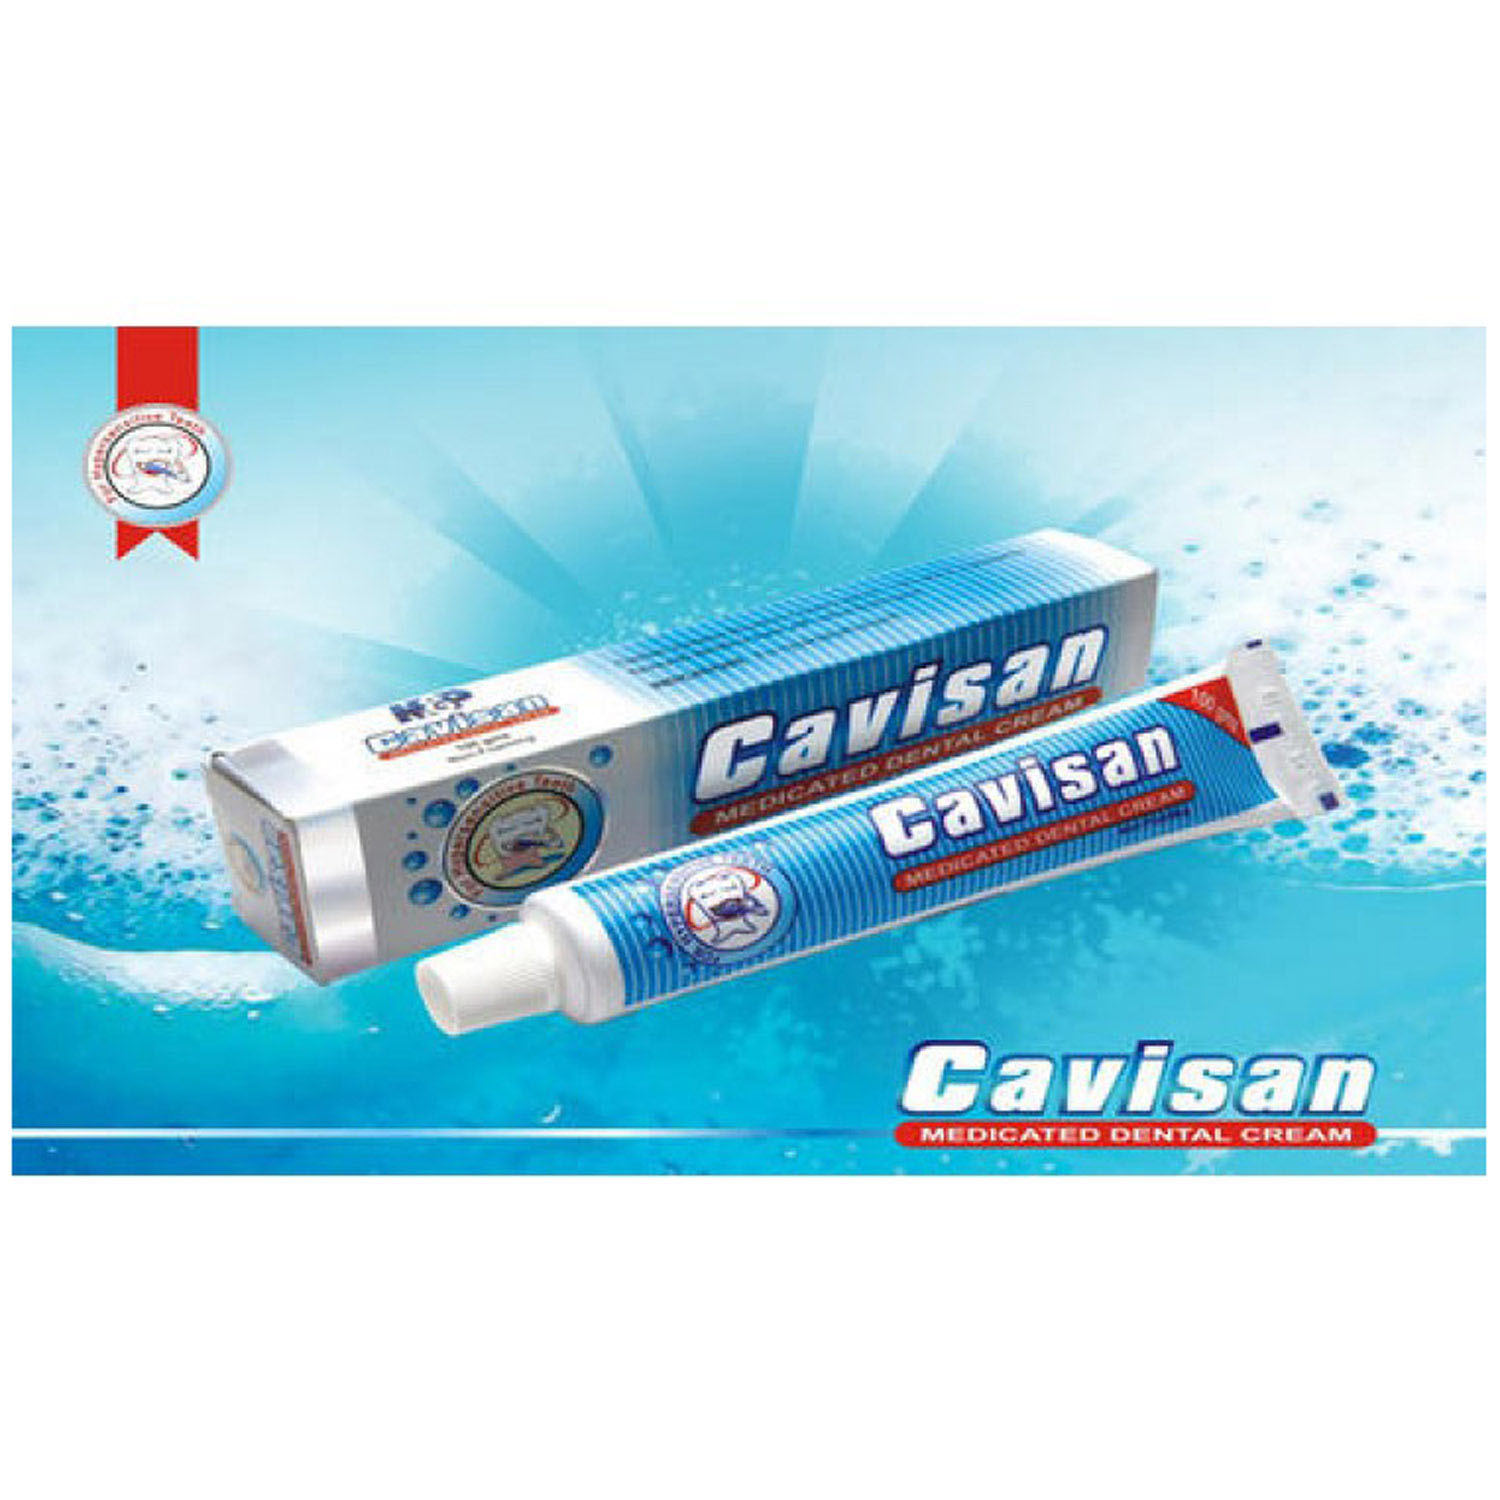 Cavisan Medicated Dental Cream, 100 gm, Pack of 1 